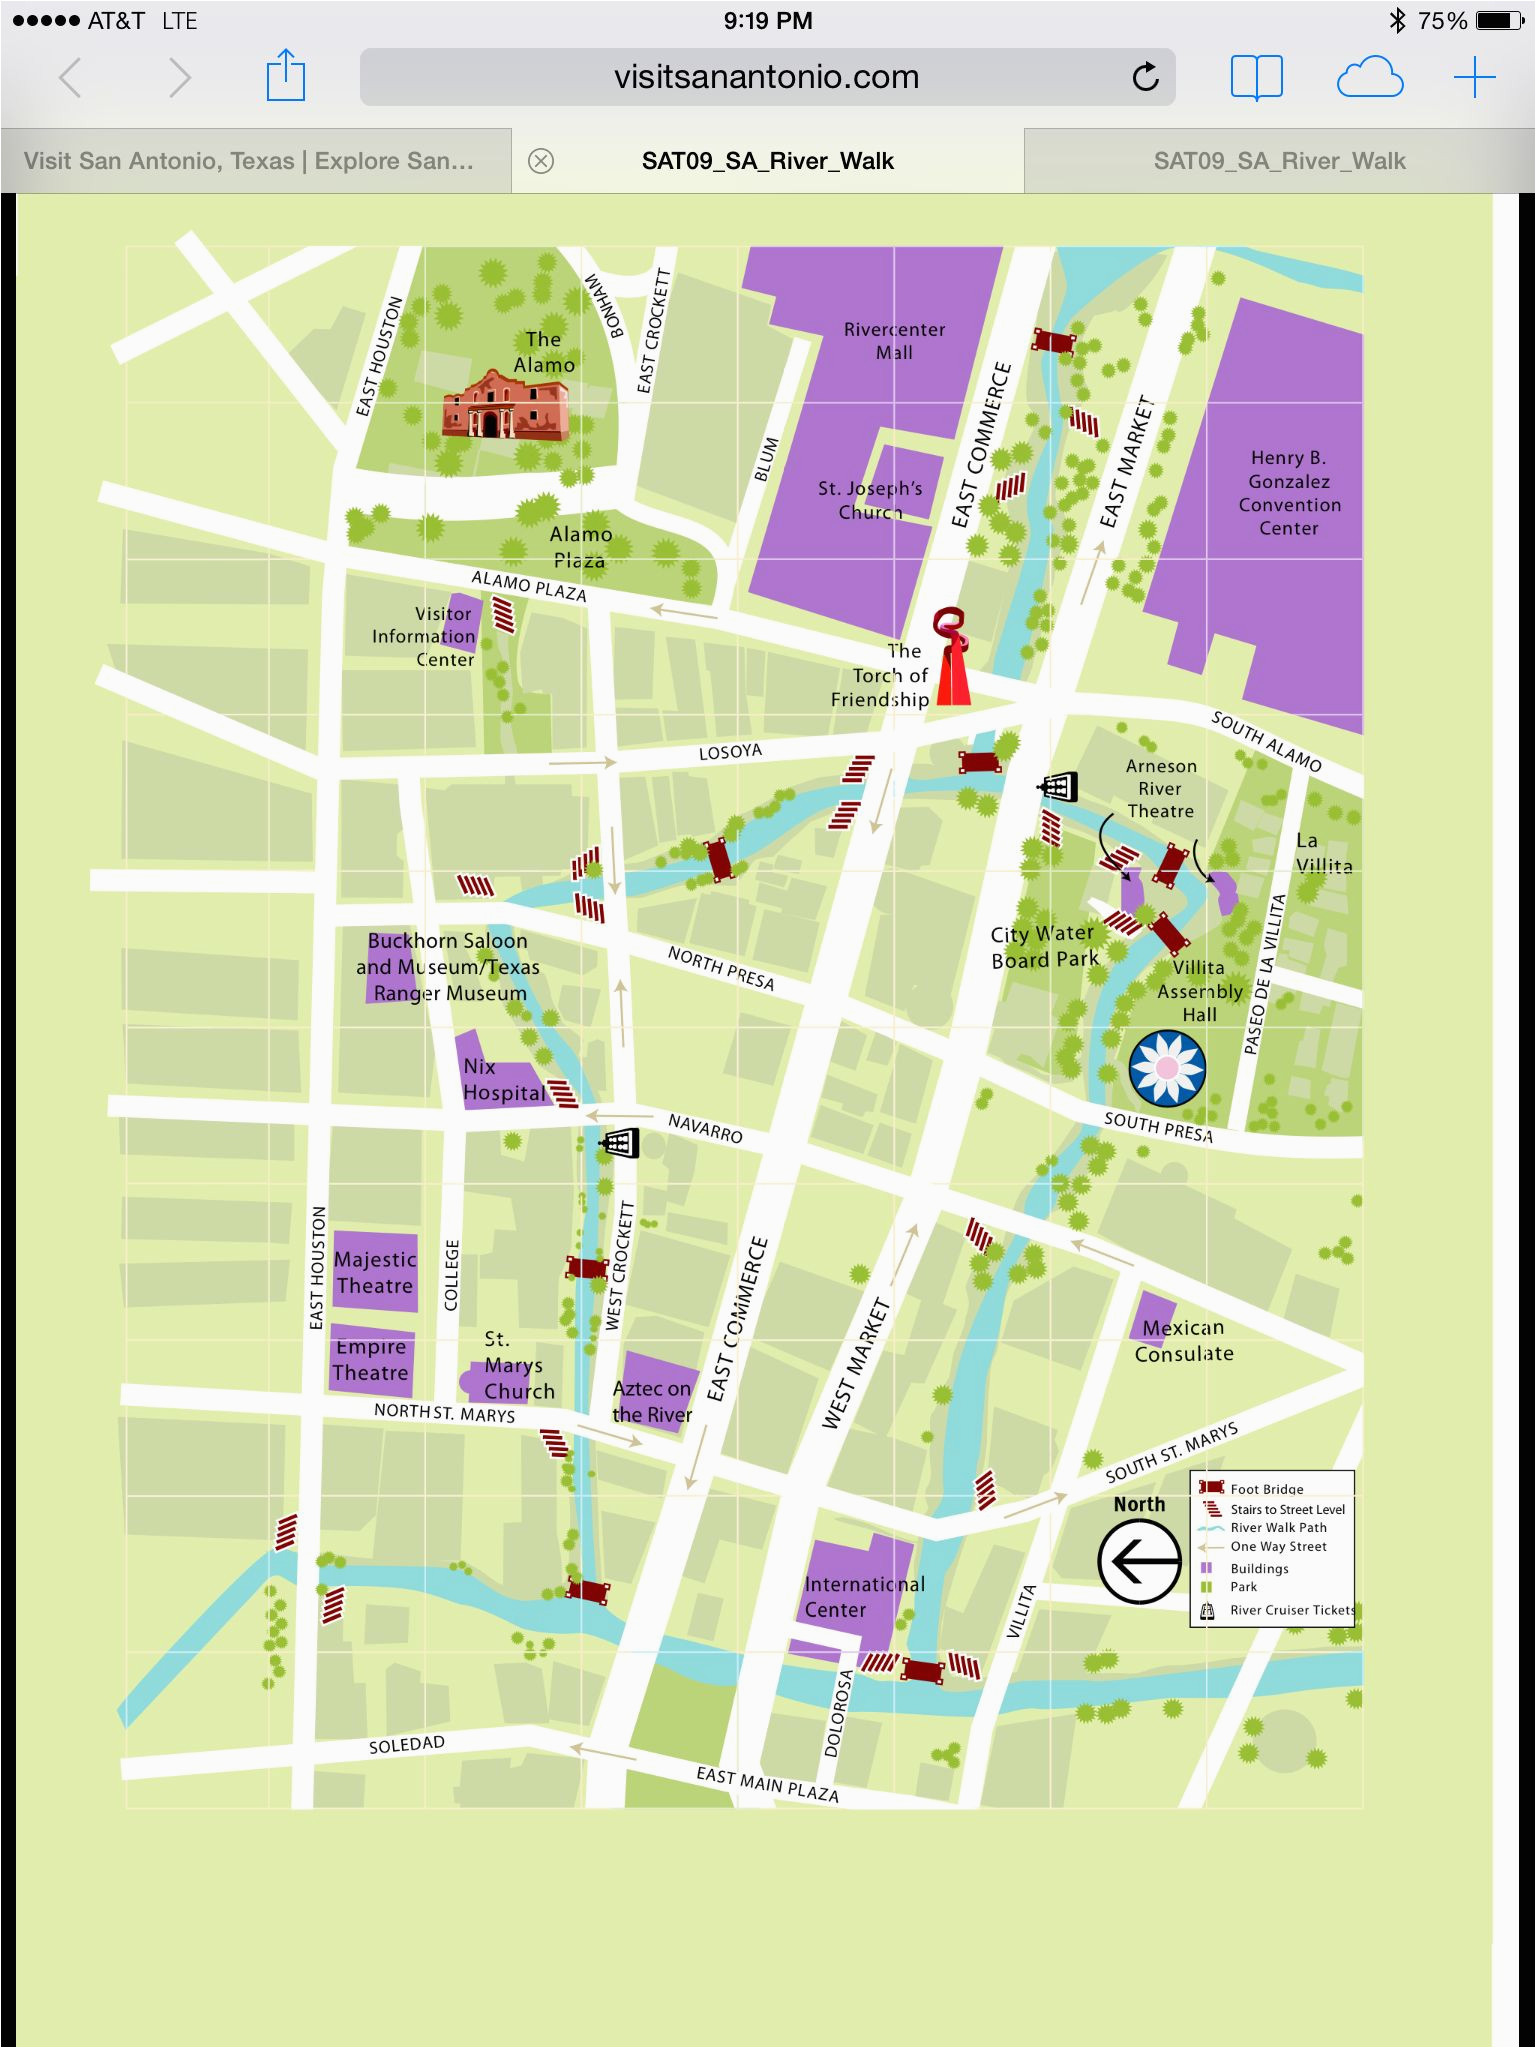 riverwalk map san antonio in 2019 san antonio texas riverwalk